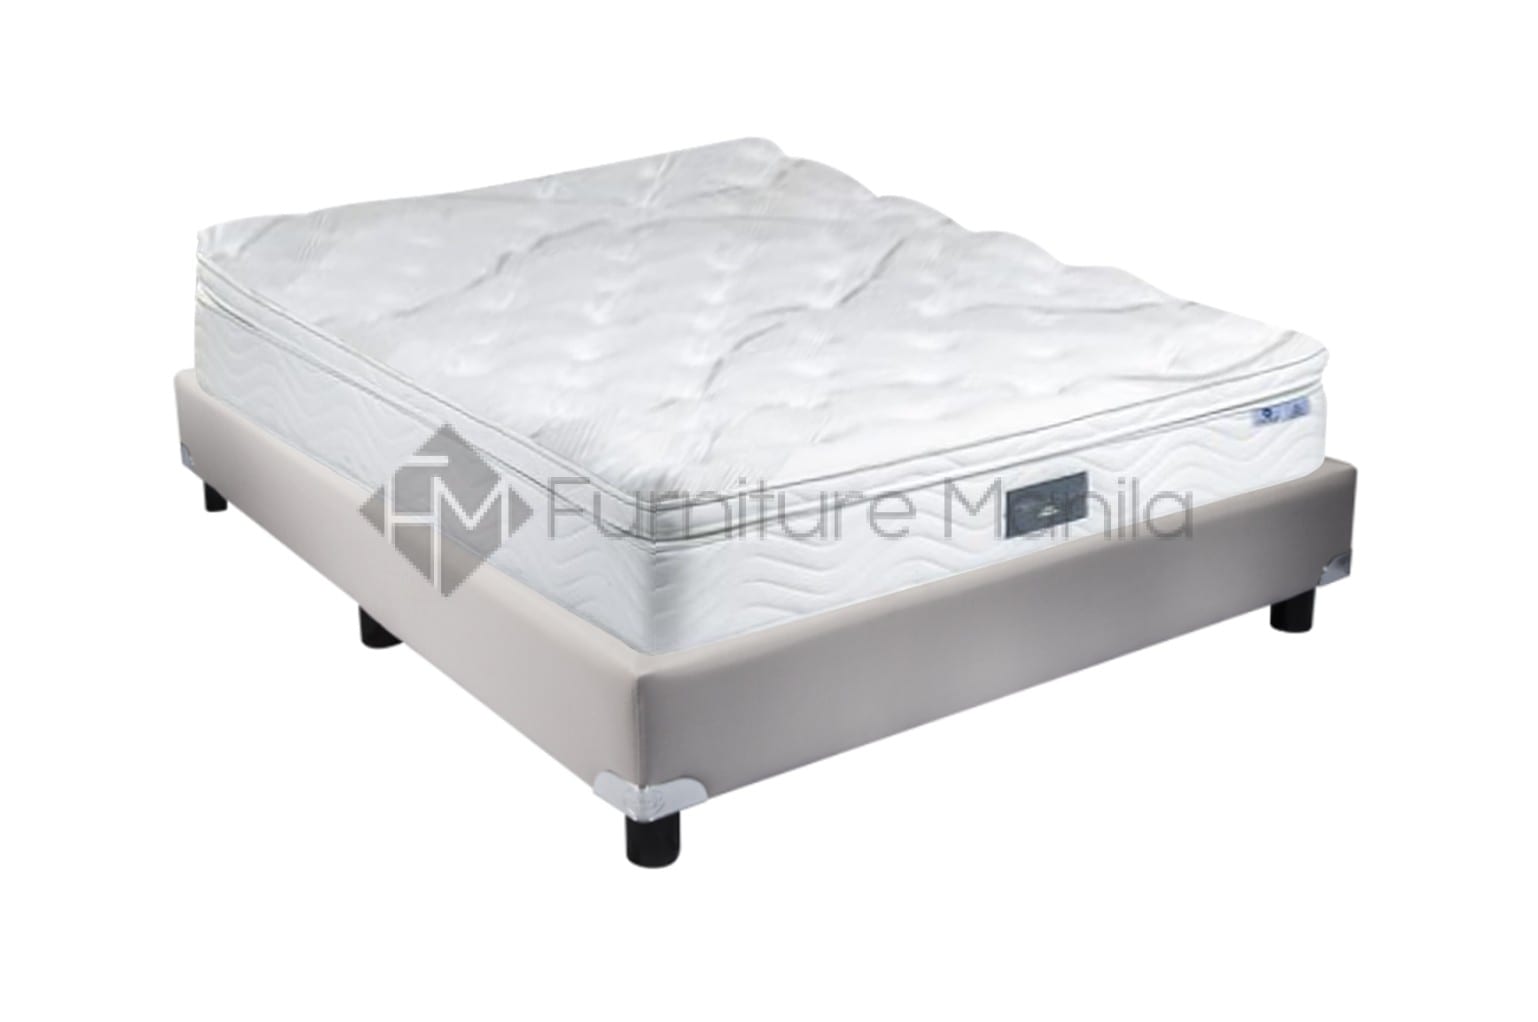 uratex brixton mattress review